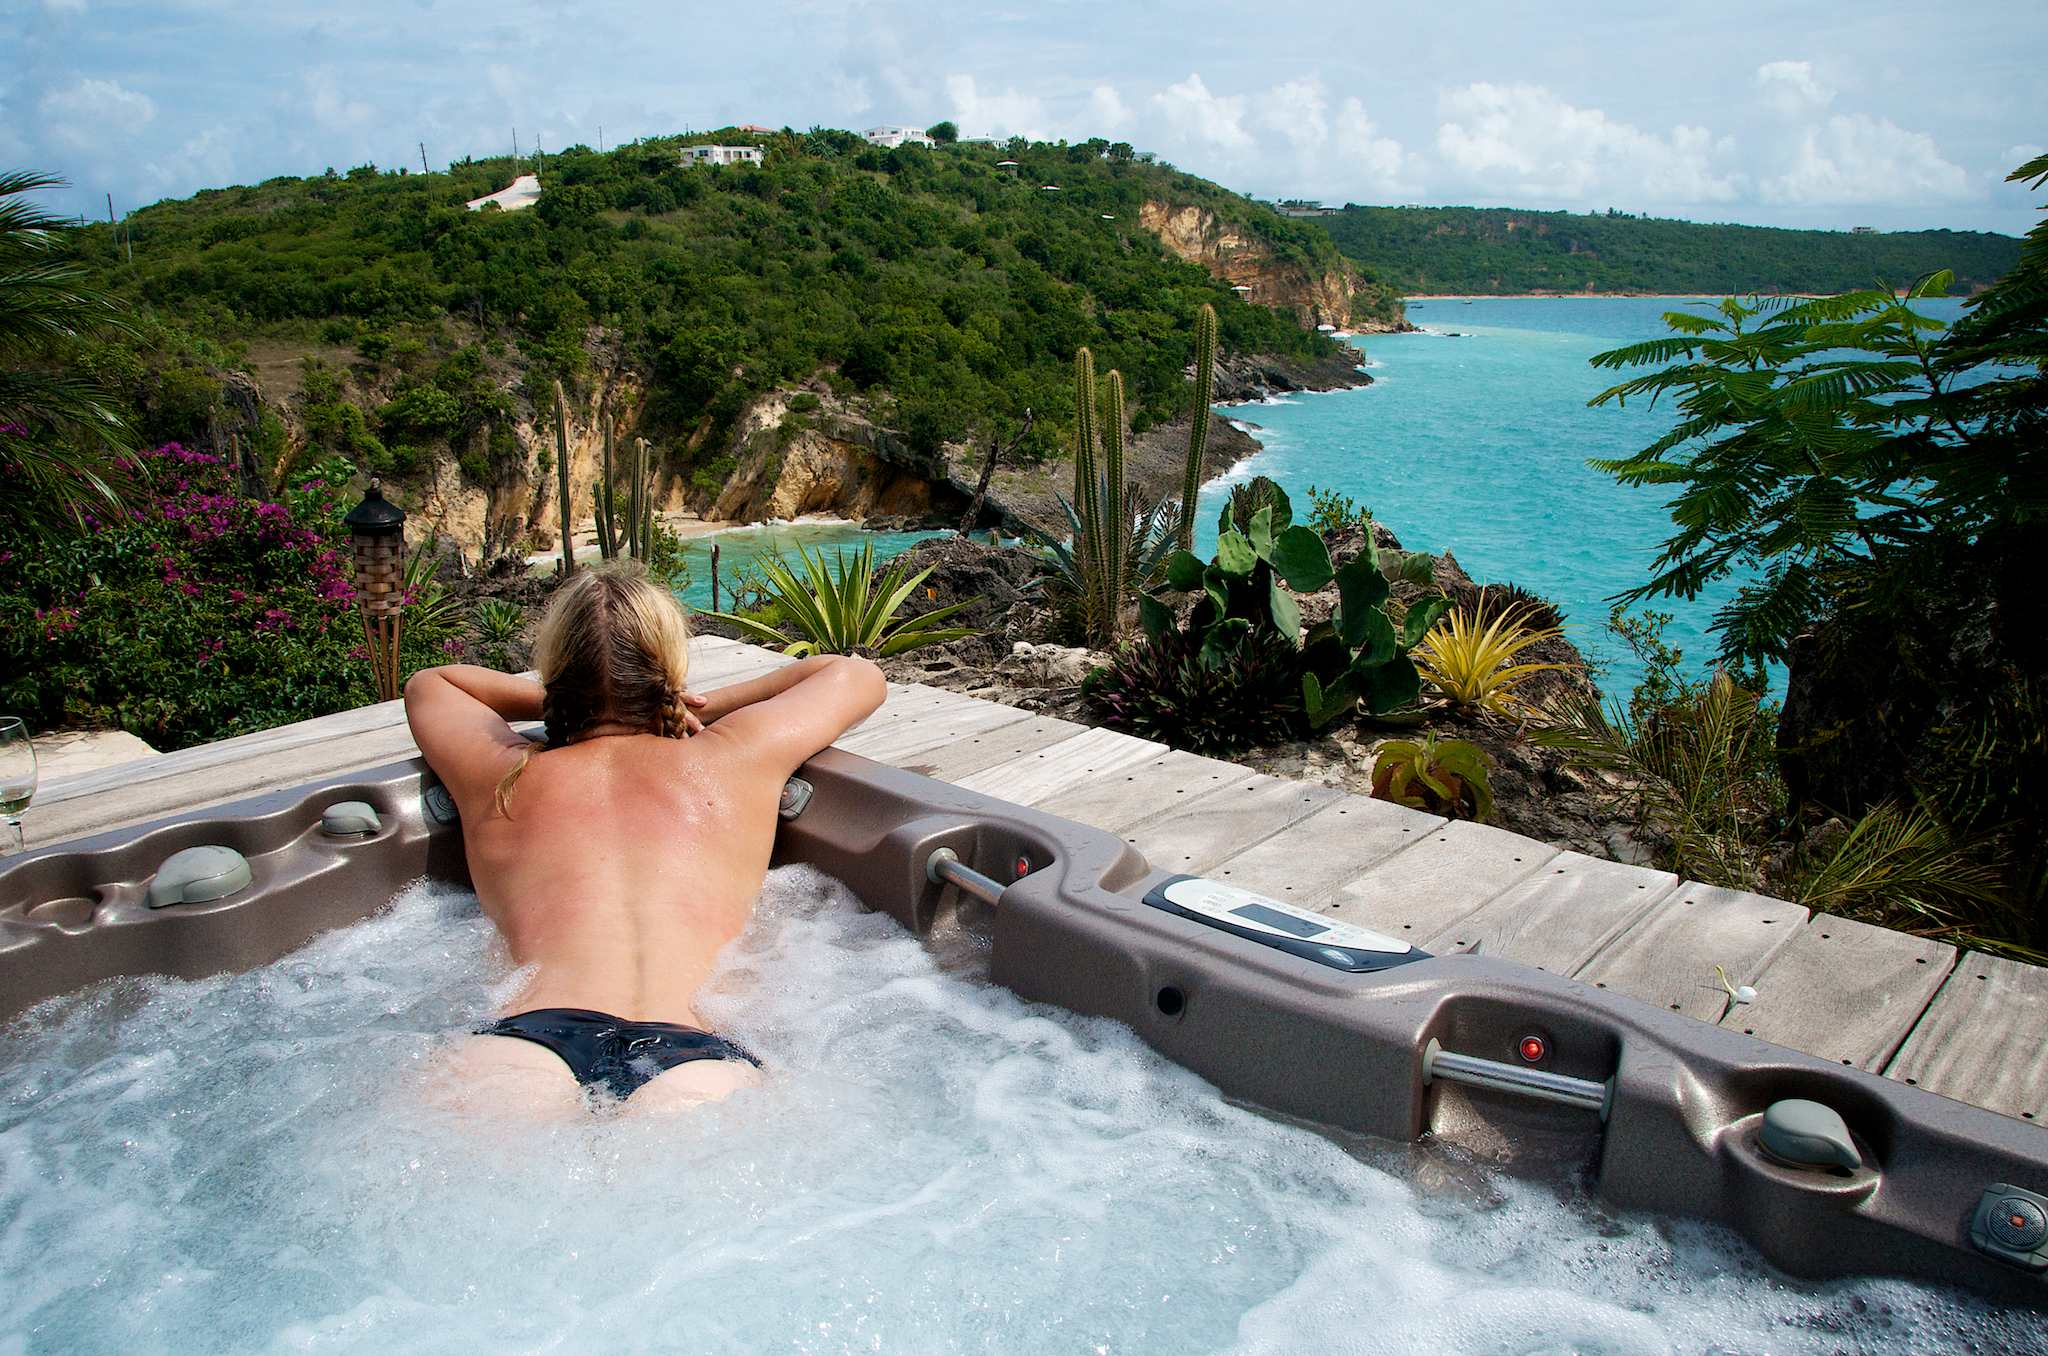 Hot tubbing at Ani Villas, Anguilla by Patrick Bennett